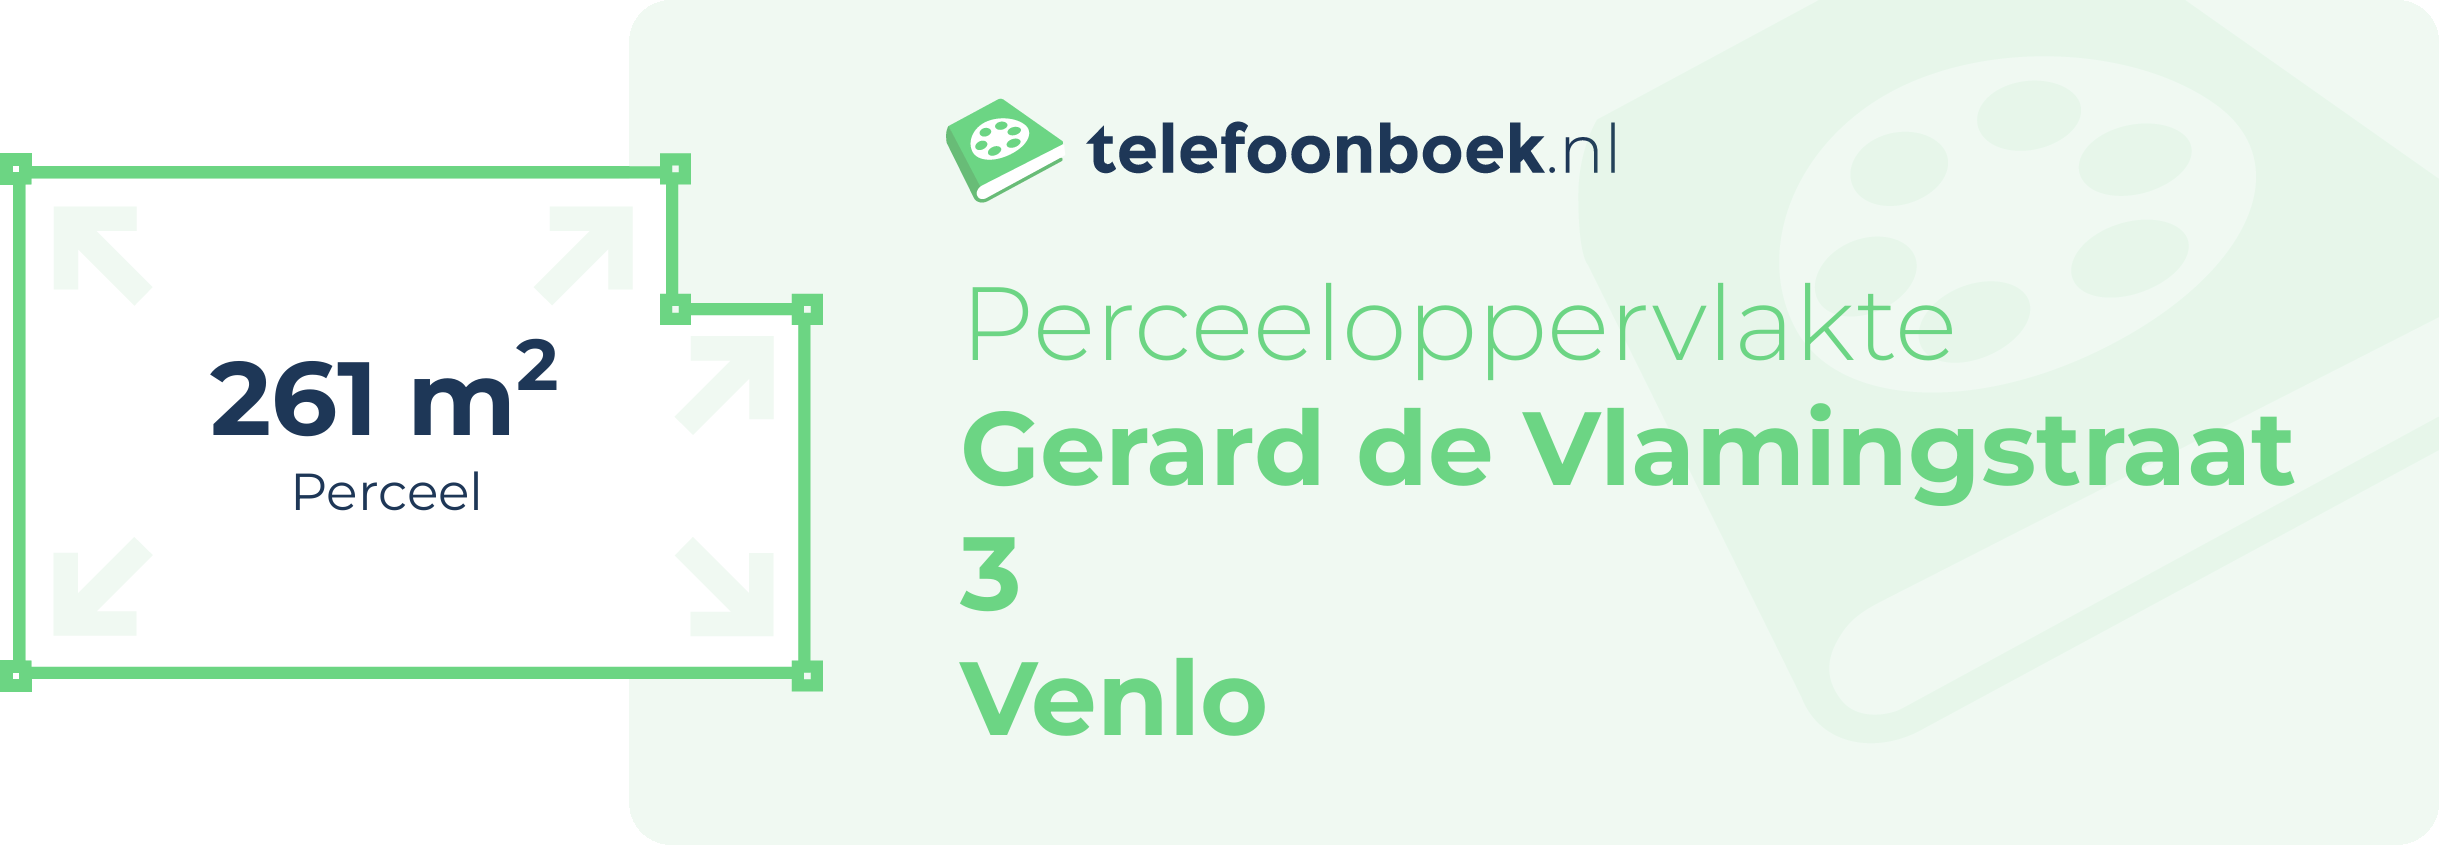 Perceeloppervlakte Gerard De Vlamingstraat 3 Venlo